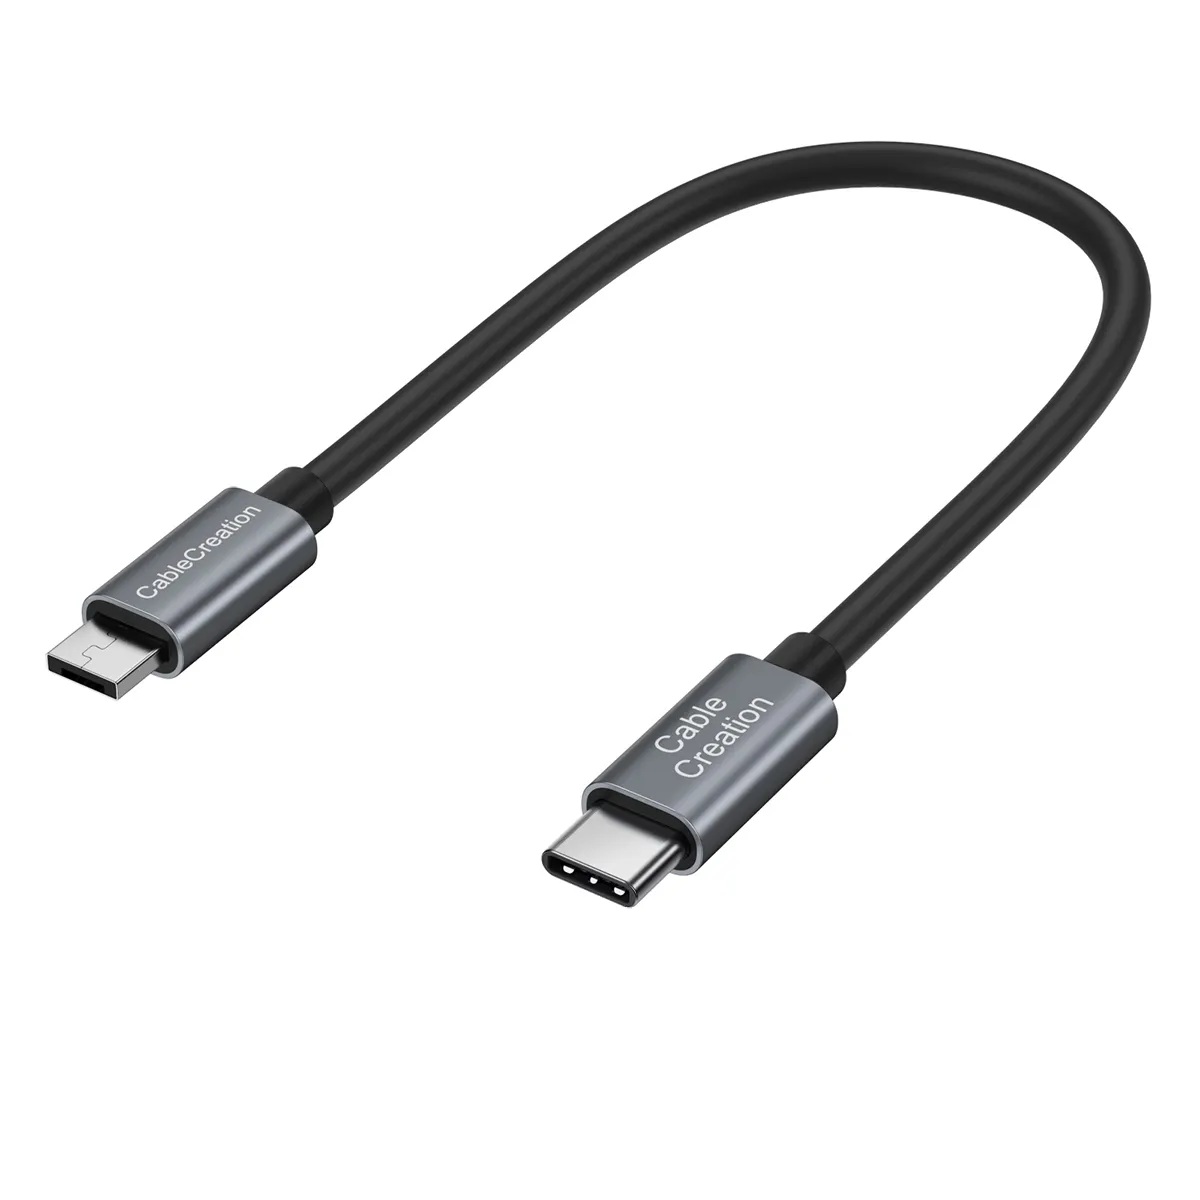 DJI Mavic USB Type C Data Cable Micro USB A to USB Type C Data Cable for DJI Spark/DJI Mavic/Mavic Pro Platinum